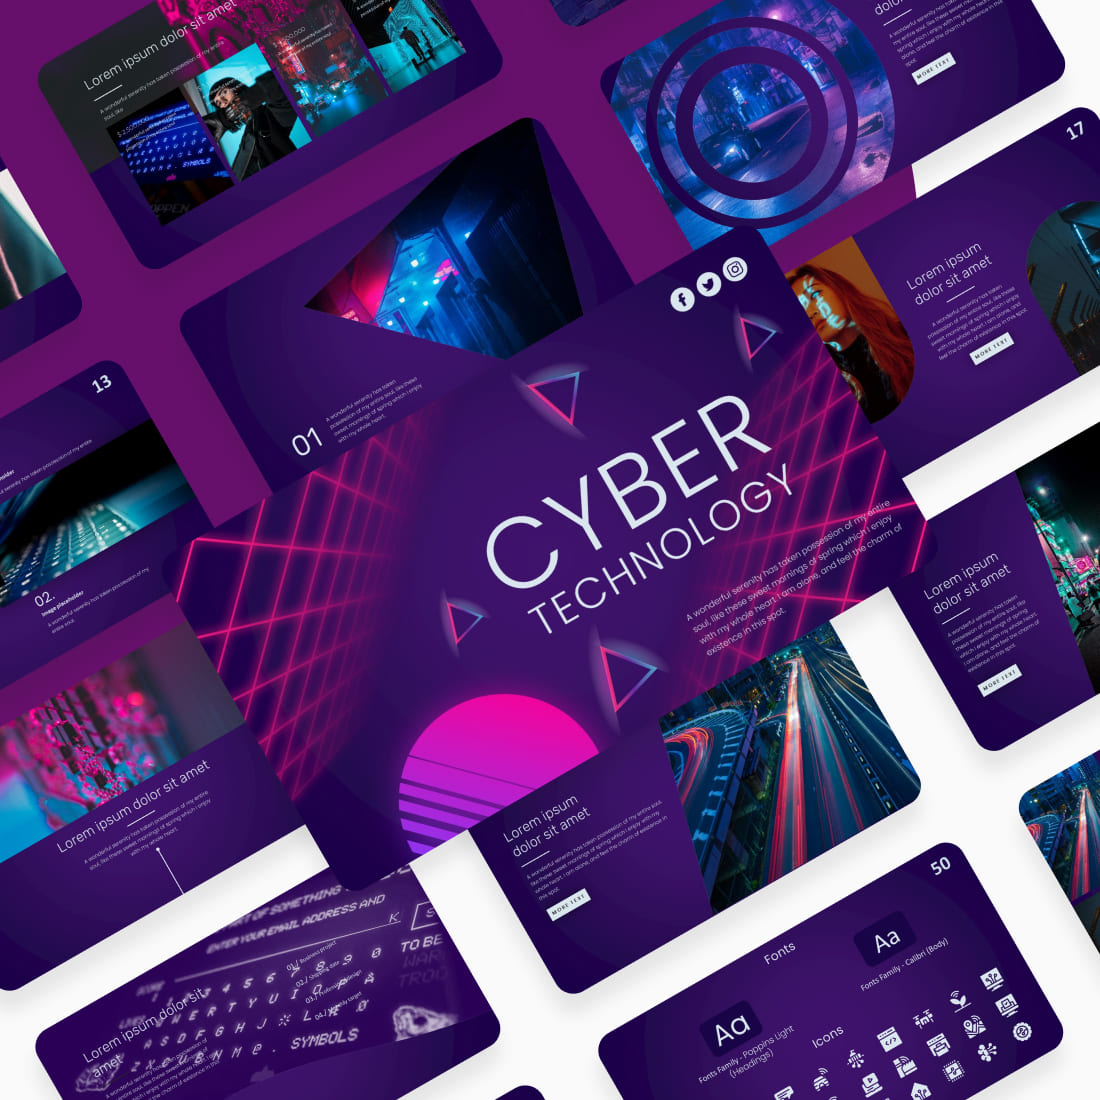 Cyber Technology Presentstion: 50 Slides PPTX, KEY, Google Slides cover image.